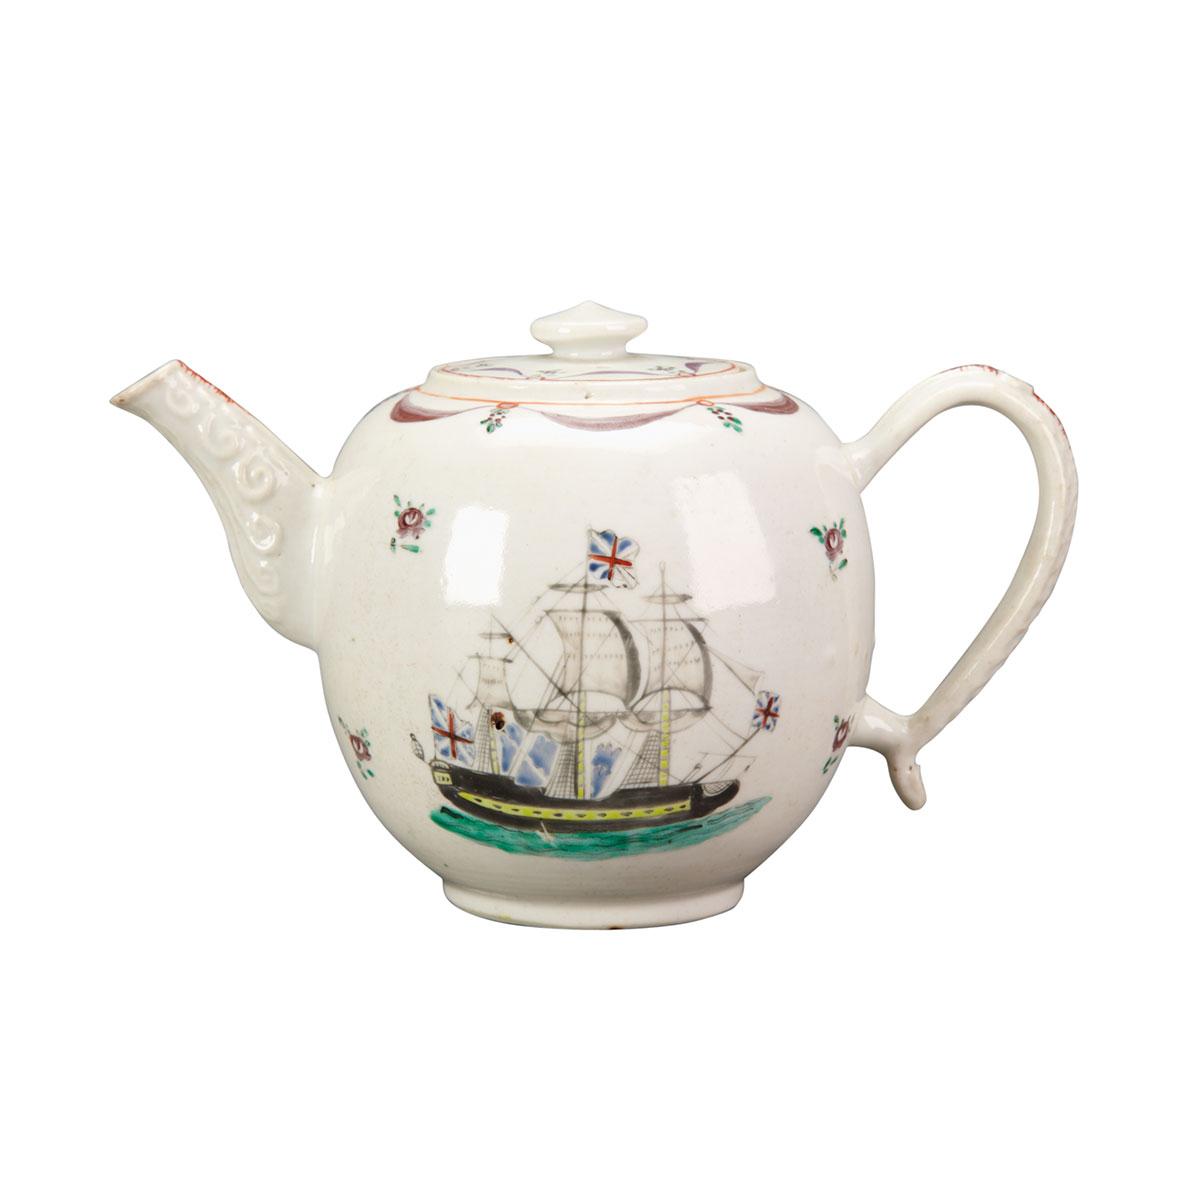 Export Famille Rose ‘British Ship’ Teapot, 19th Century